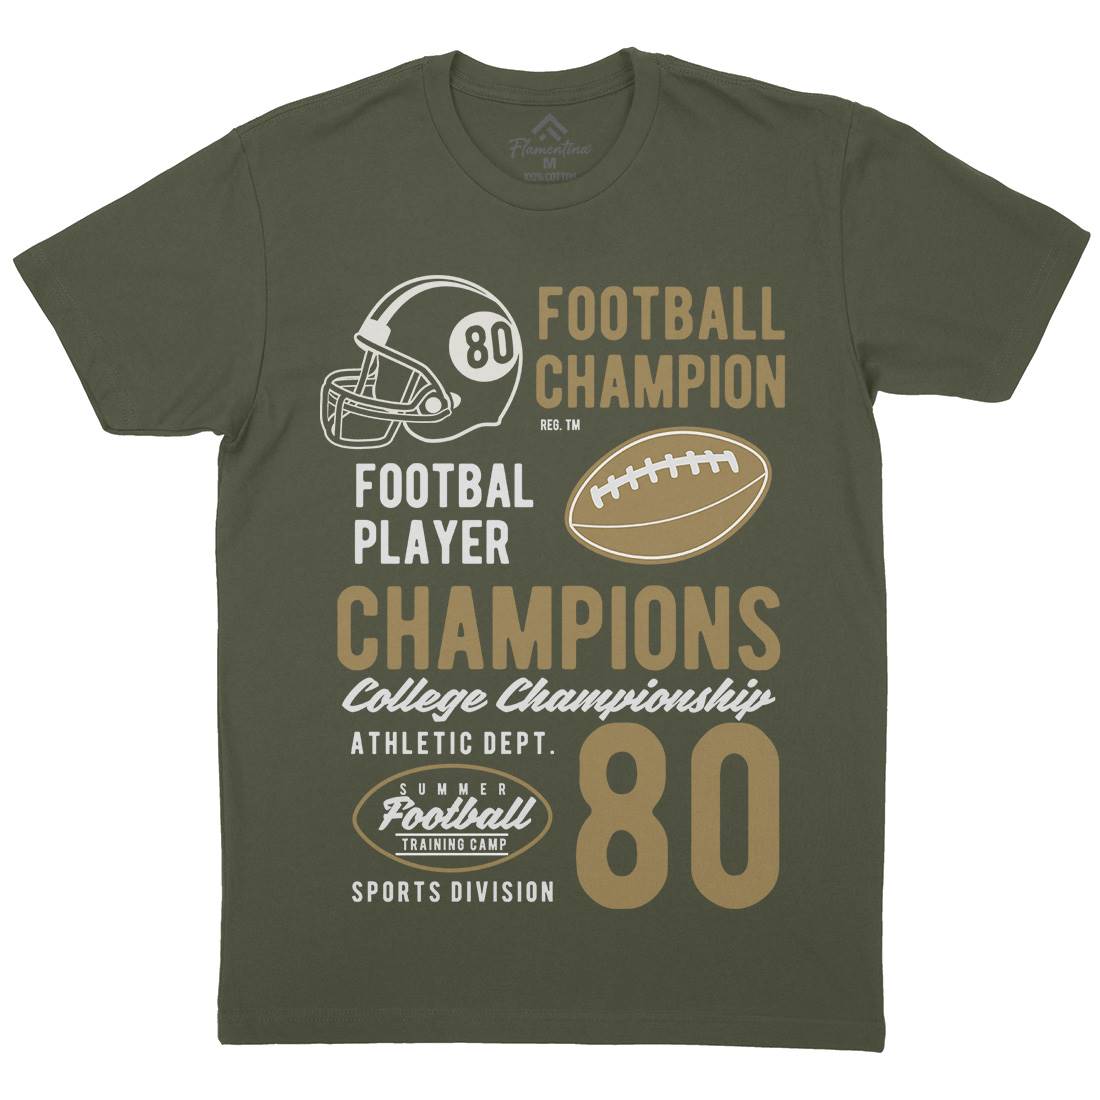 Football Champions Mens Crew Neck T-Shirt Sport B405